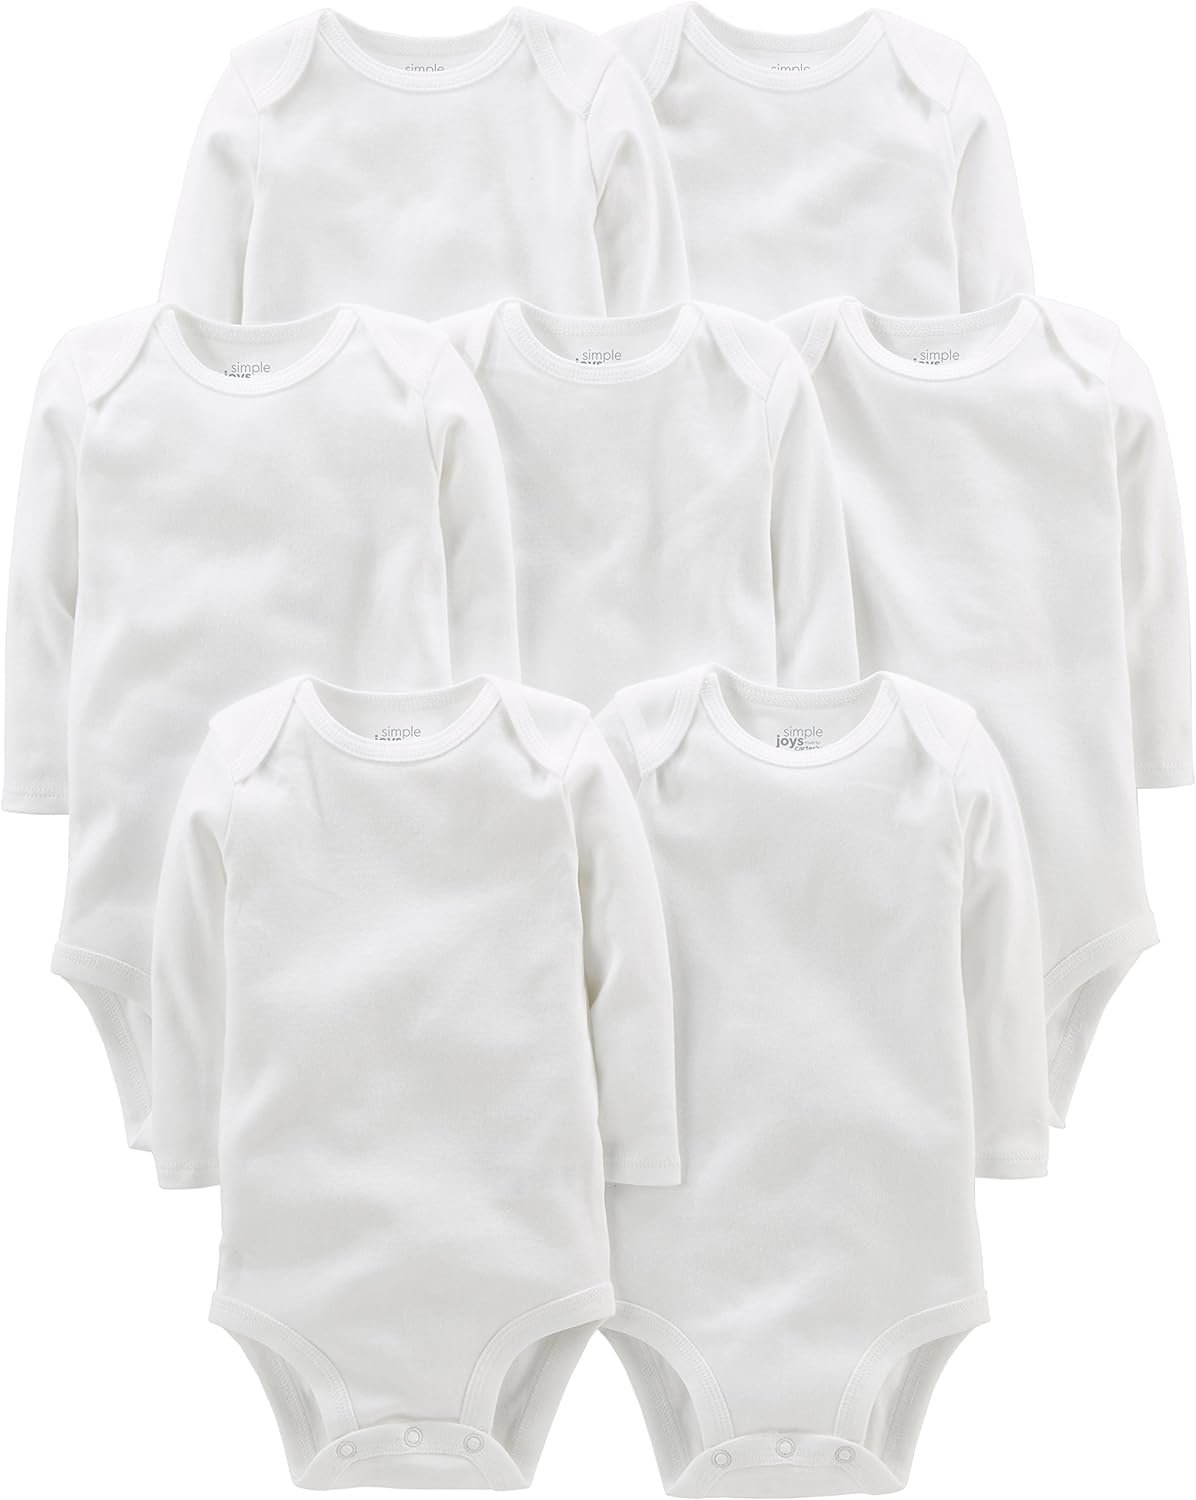 Unisex Babies Long-Sleeve Bodysuit